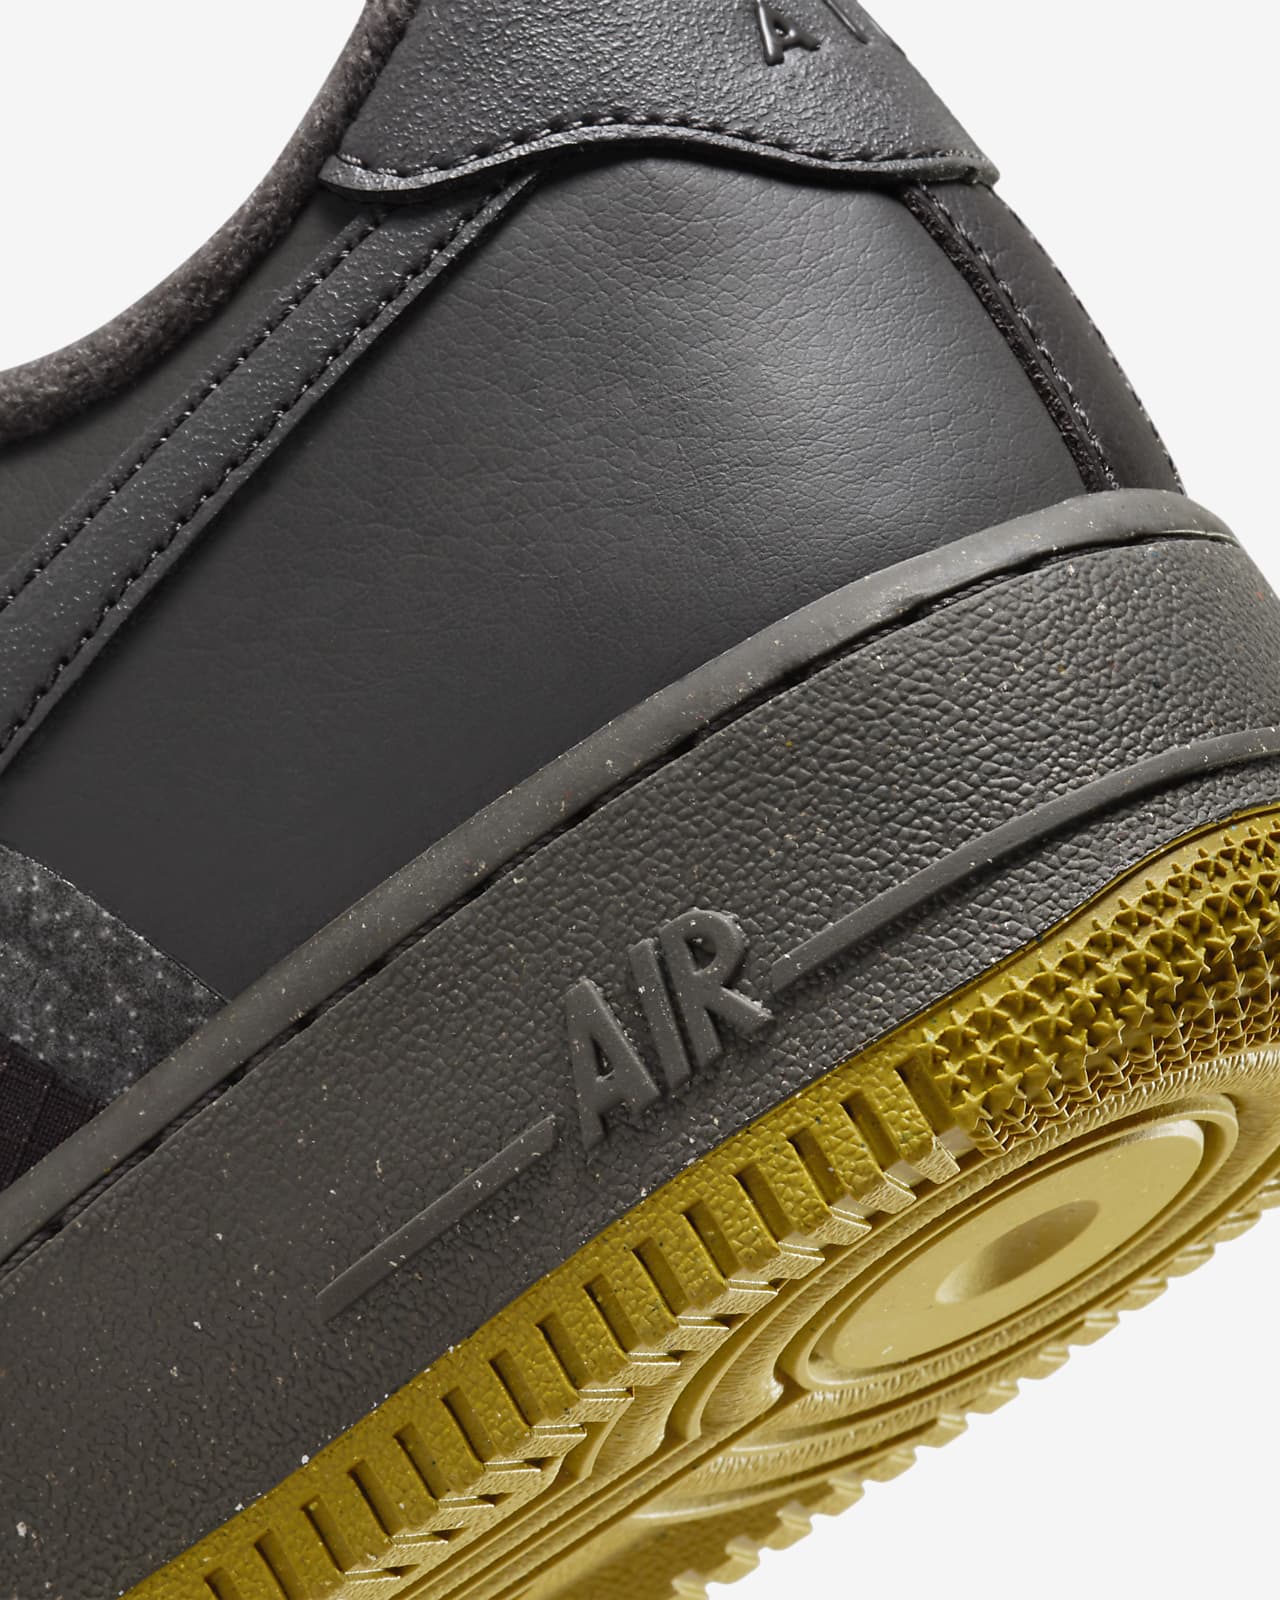 Nike Mens Air Force 1 High '07 LV8 Black/Metallic Gold-Black Leather Size  10 